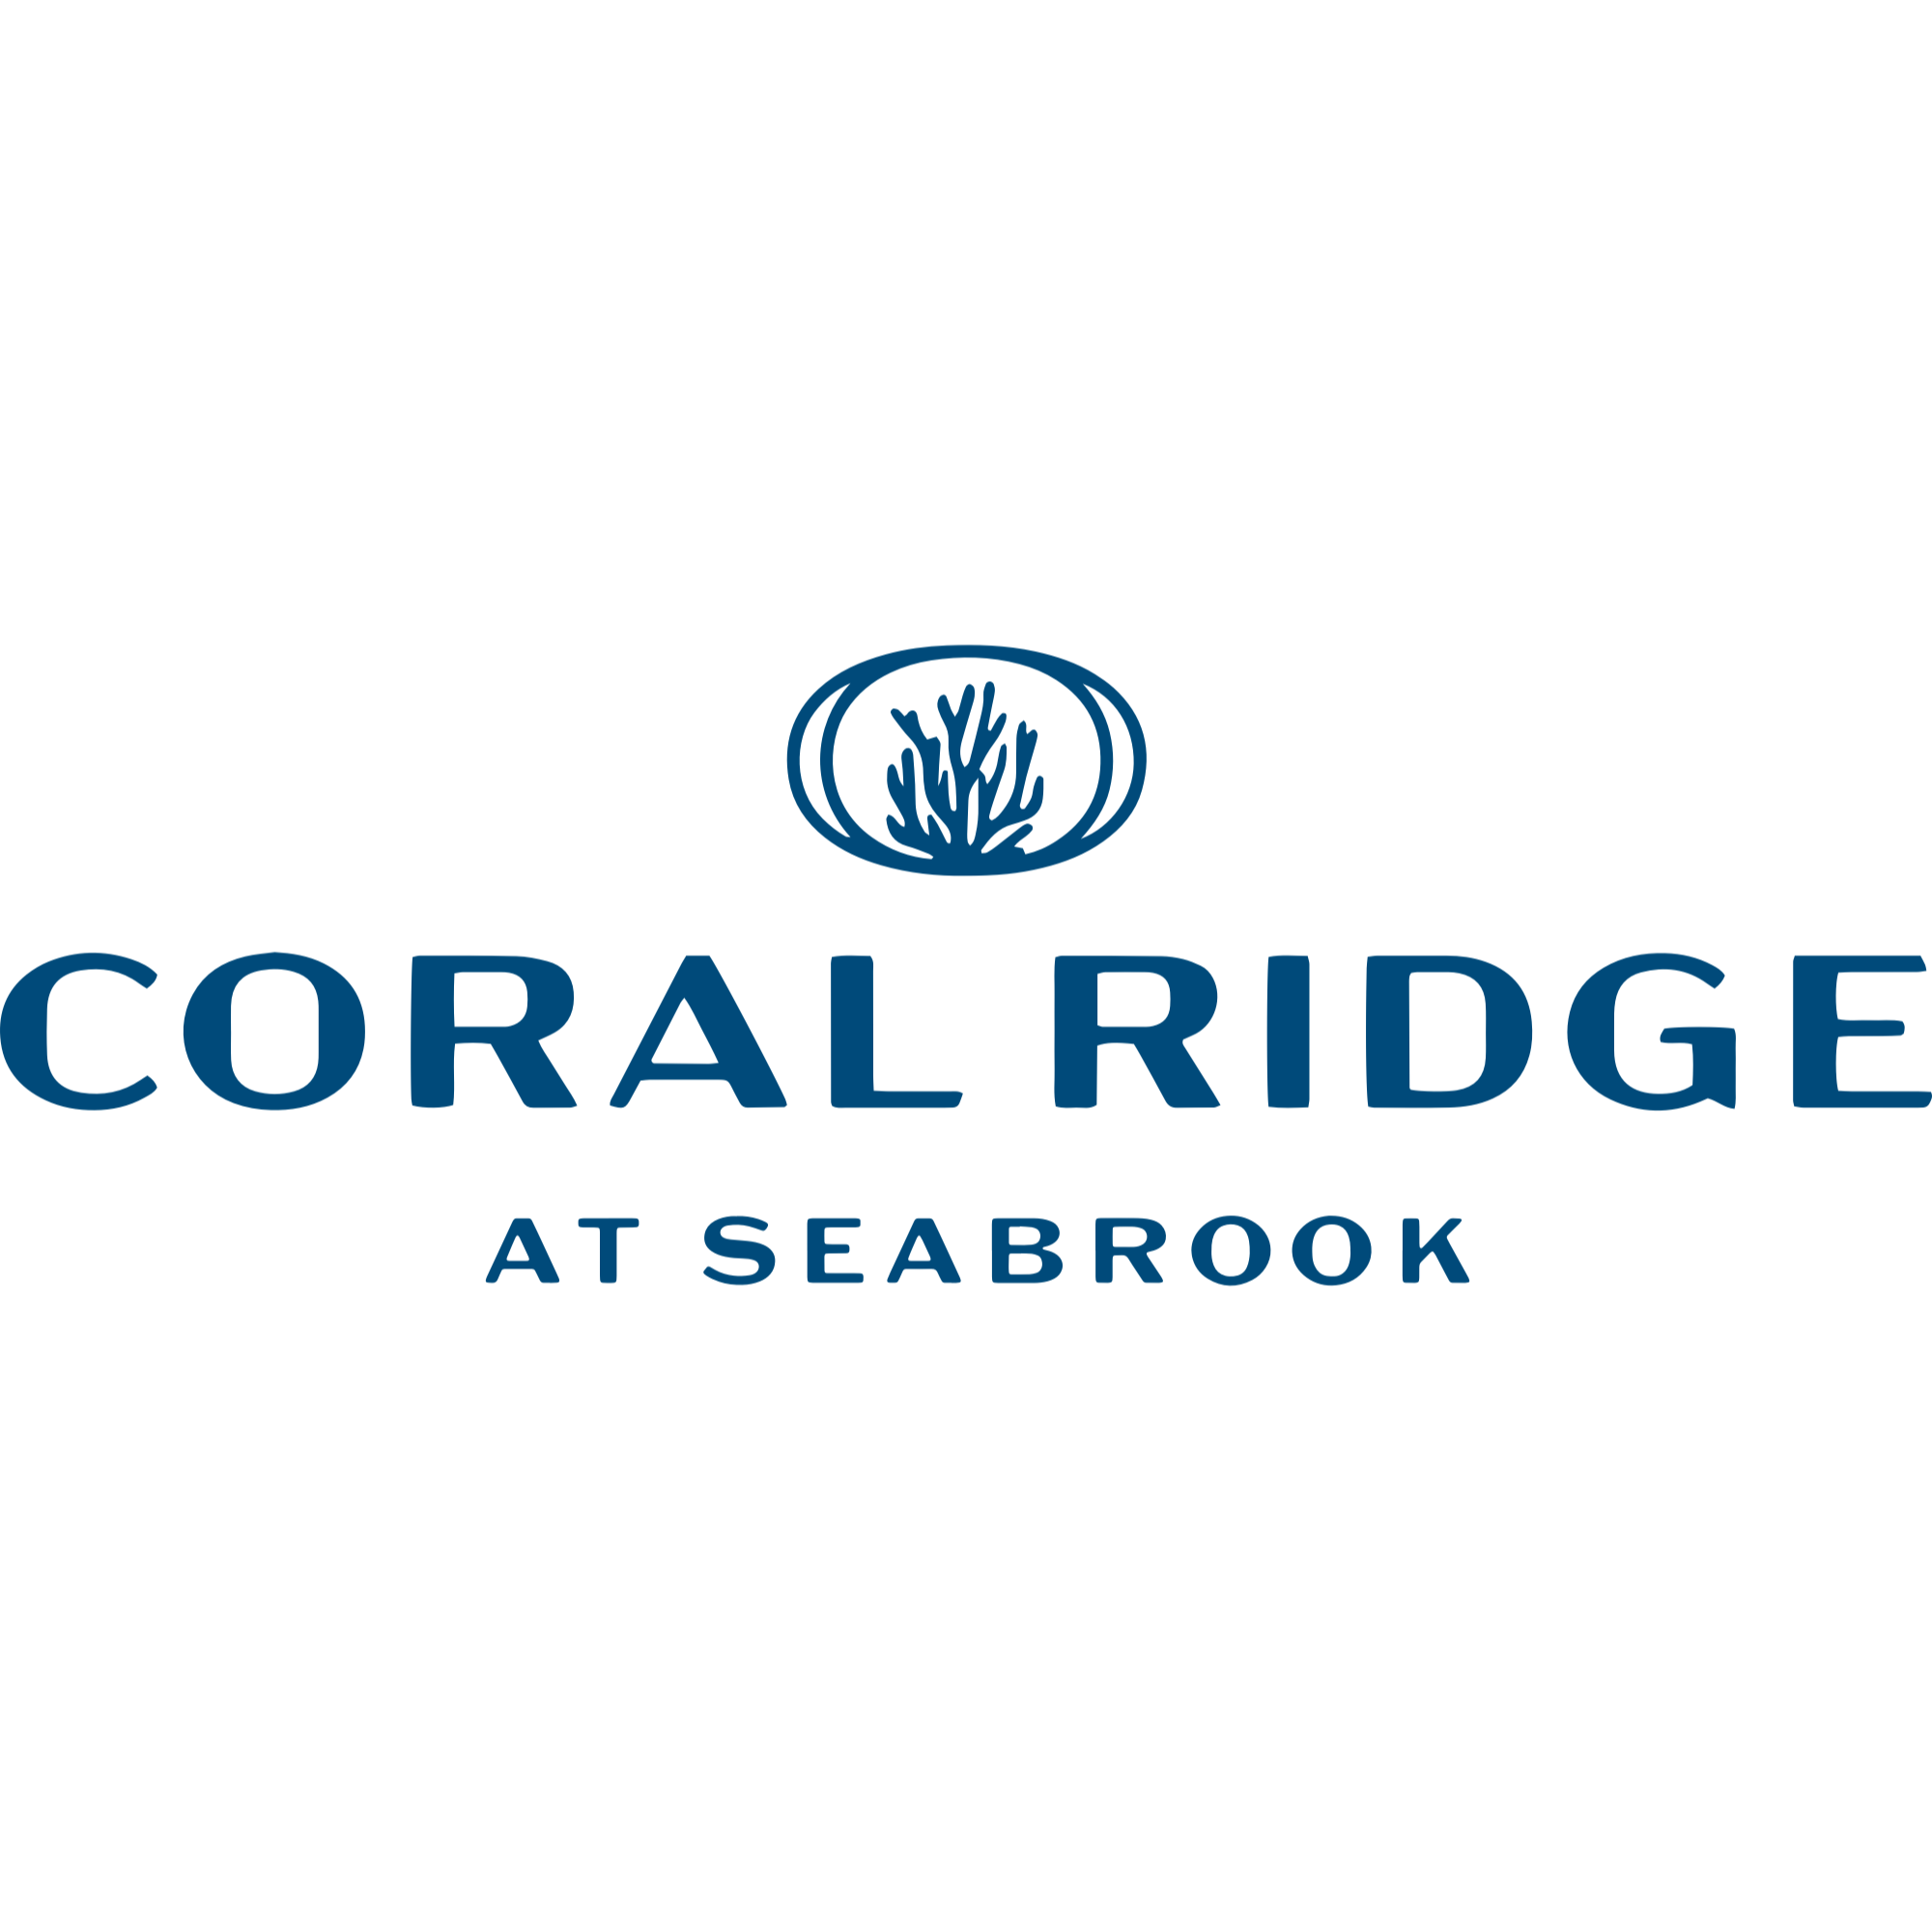 Coral Ridge at Seabrook